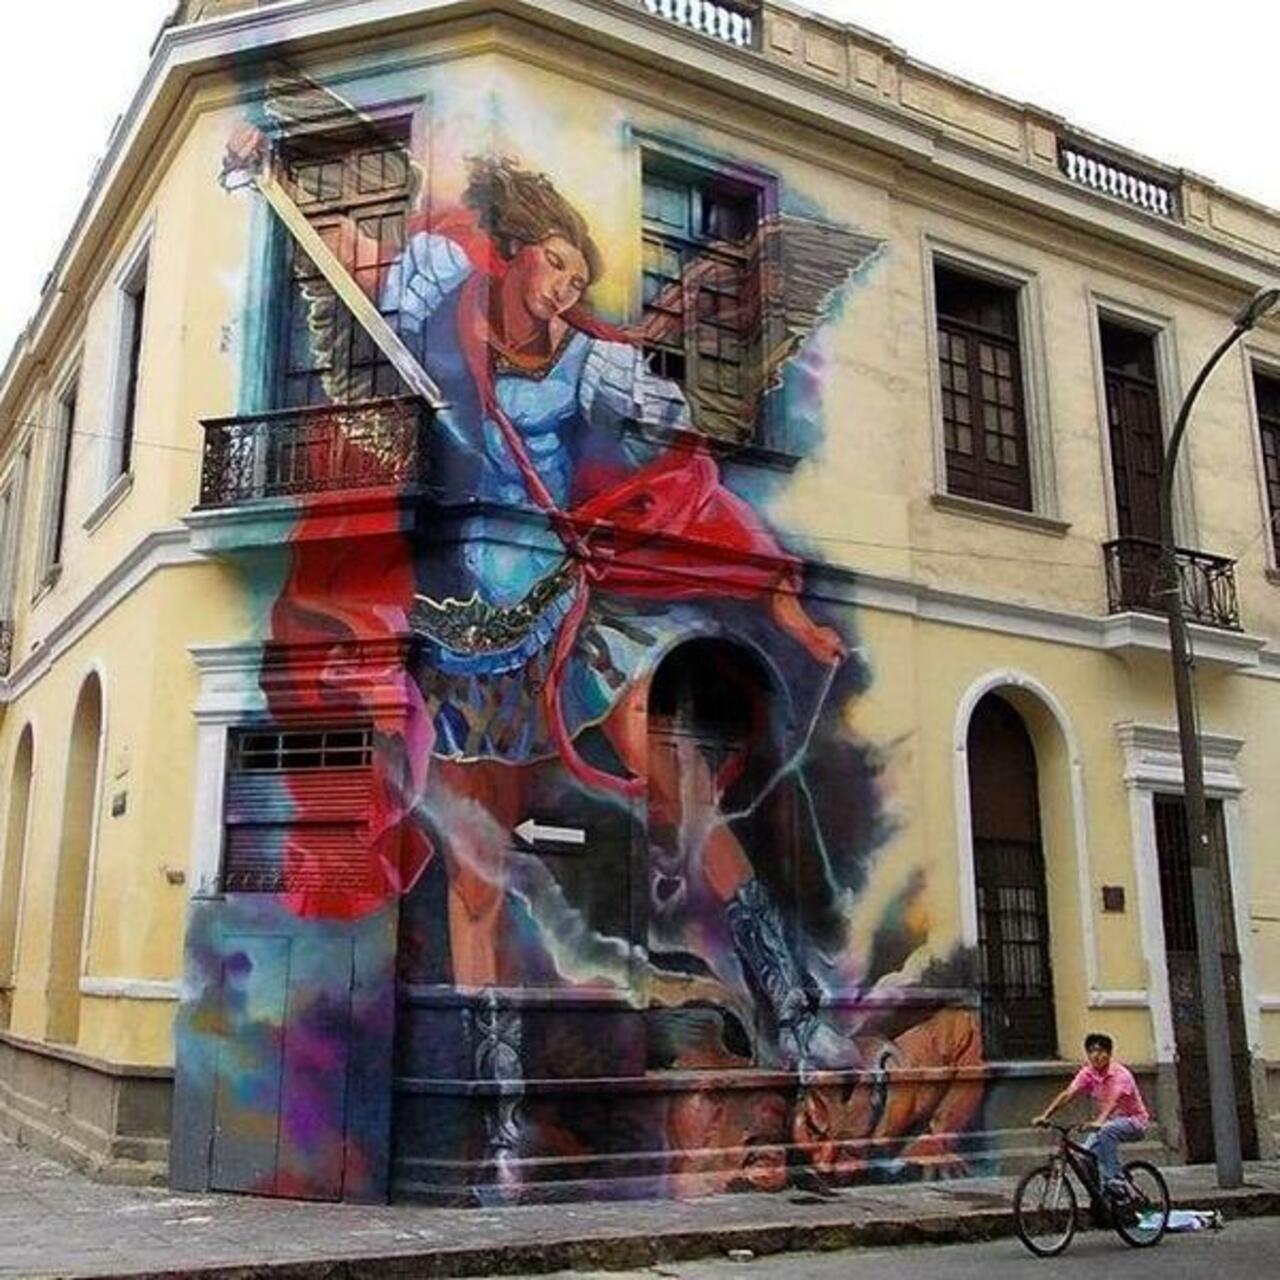 RT @streetartscout: RT @Peepsqueak @FCuypers Street art #graffiti by Raf in Lima, Peru @KimKaosDK #streetart #urbanart #peru #art #mural http://t.co/pSa6DnWajB